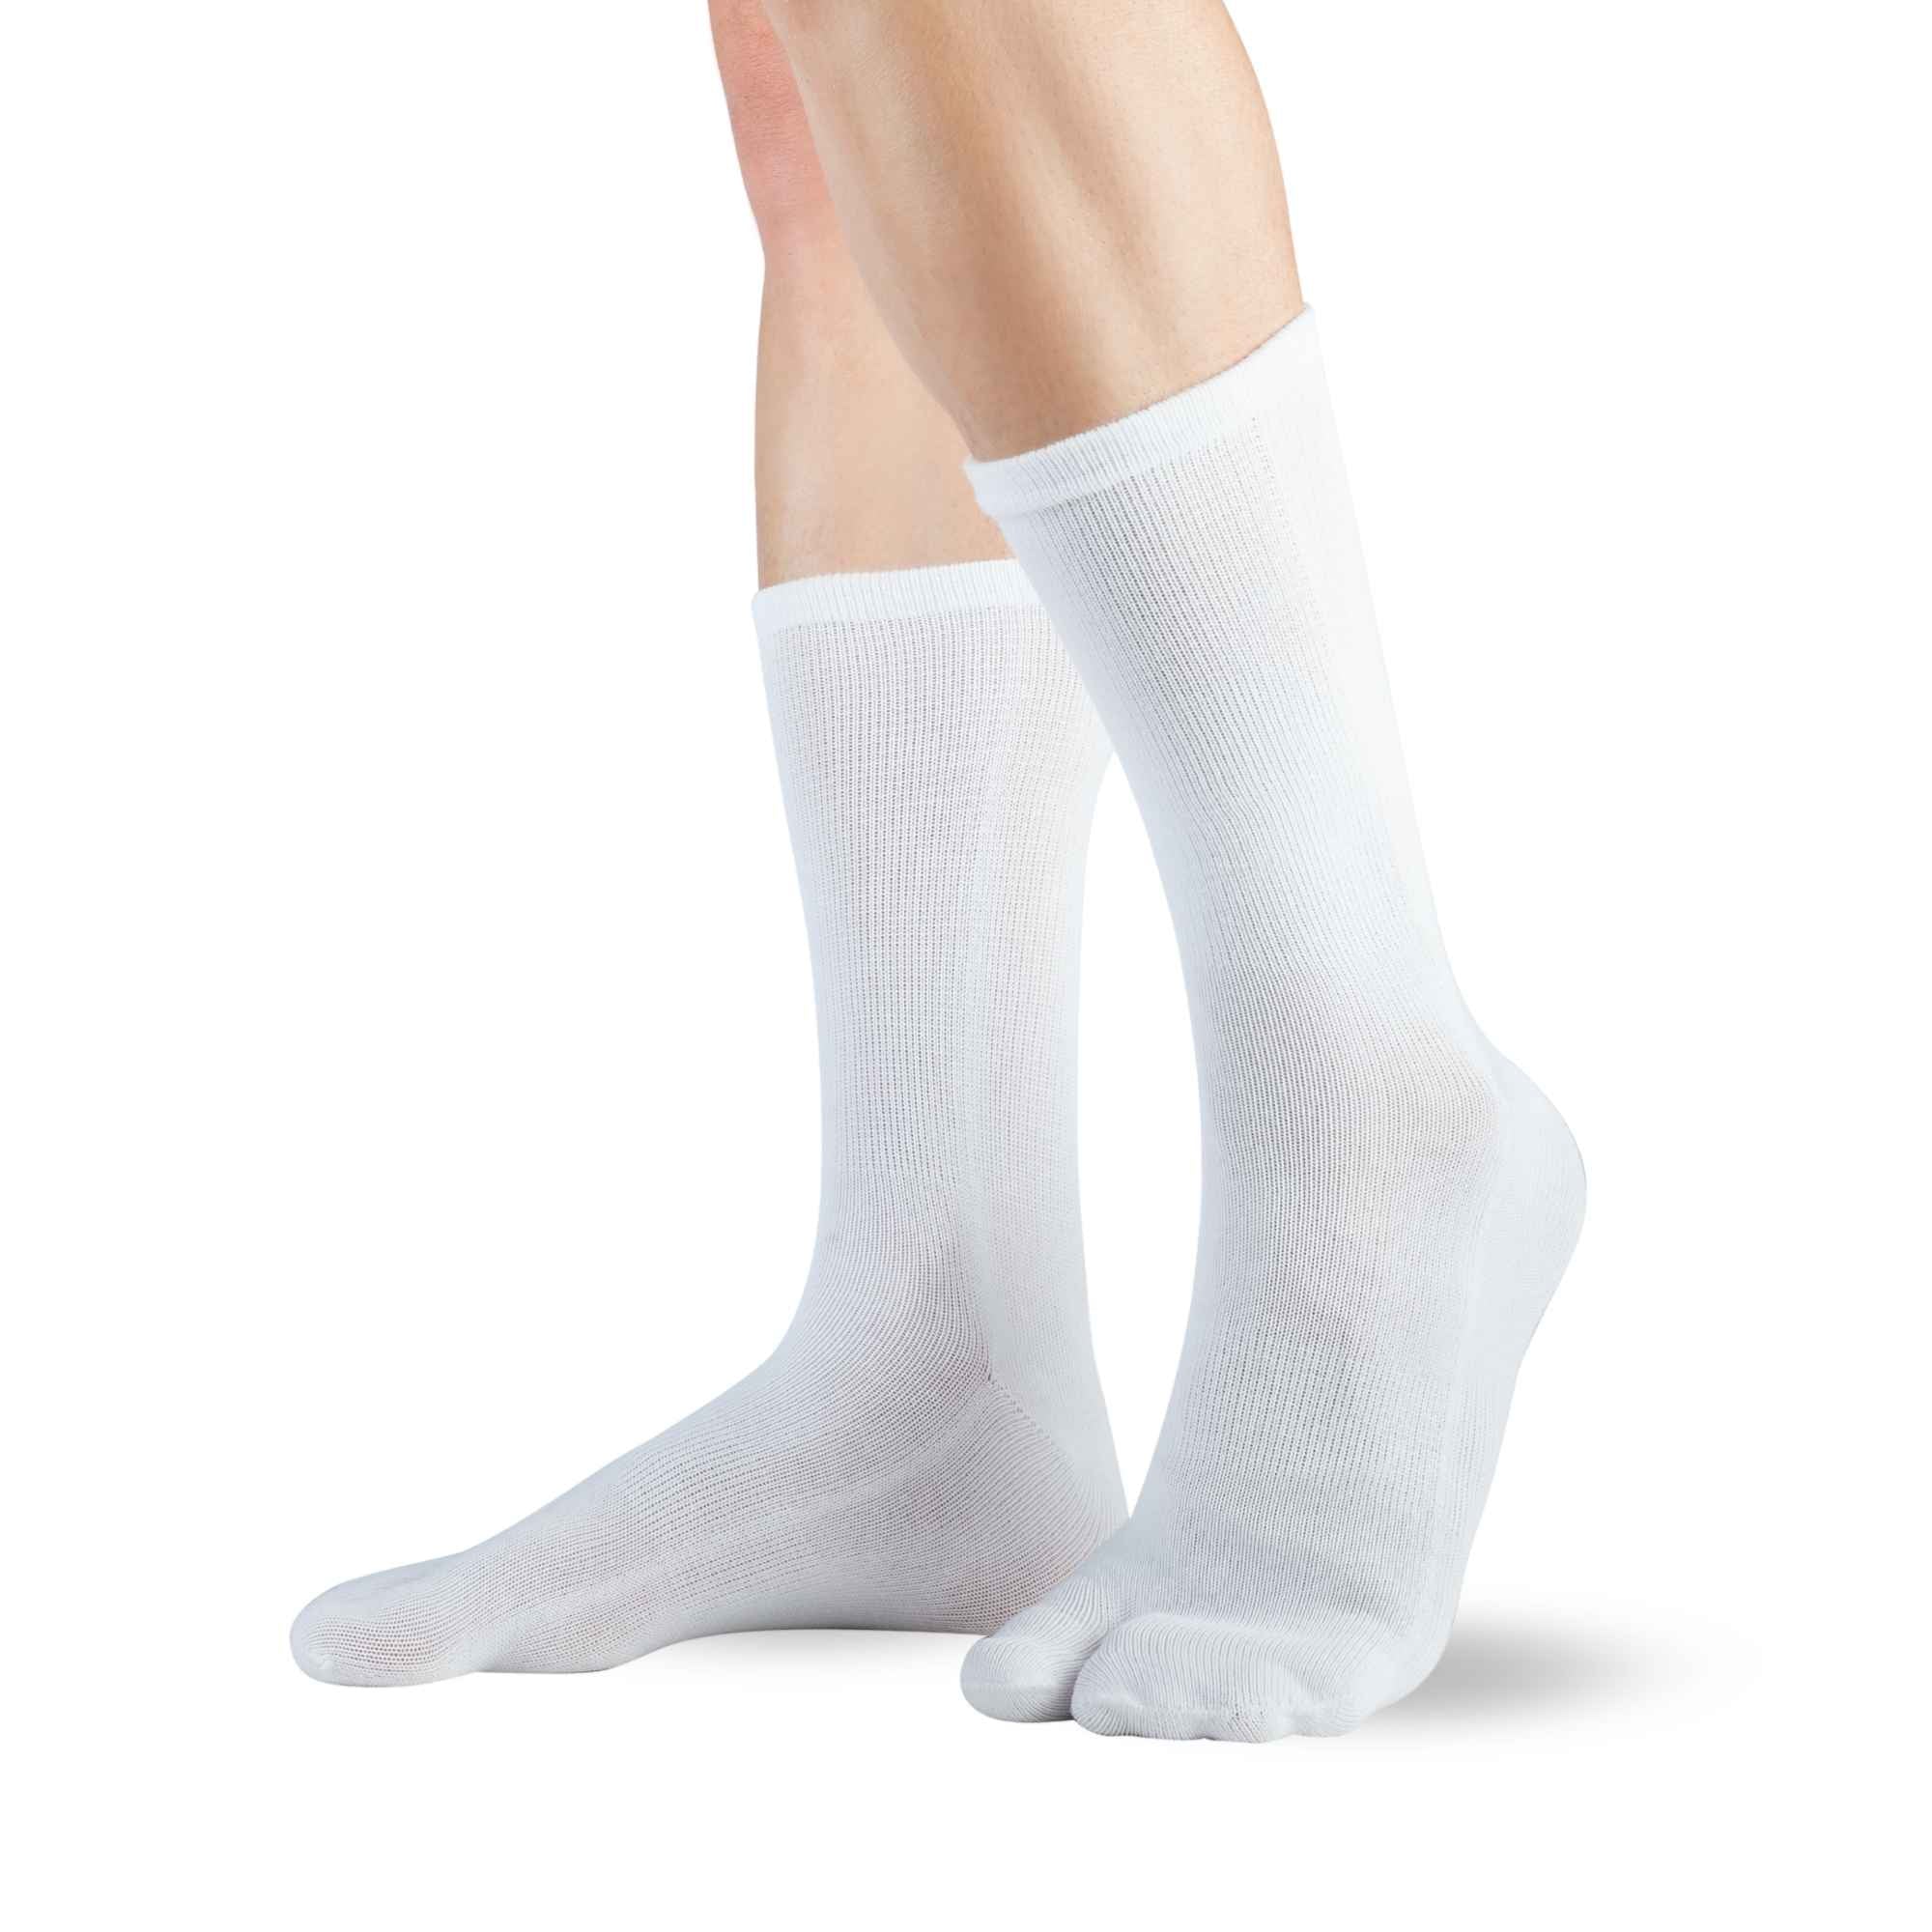 Knitido Traditionals Tabi two-toe socks - Knitido®